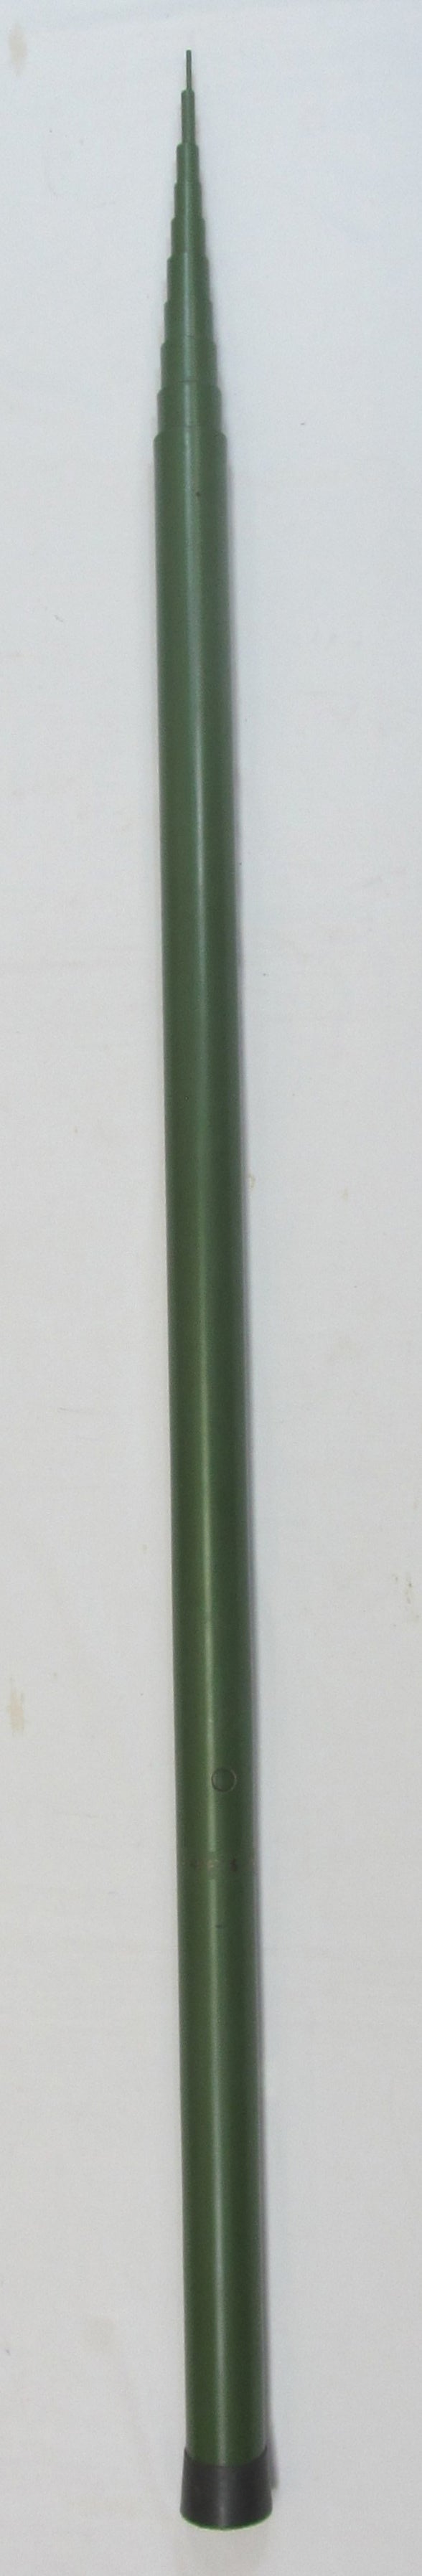 MFJ-1917, FG POLE, HEAVY, 43FT GREEN, TELESCOPIC, W/TOP RING